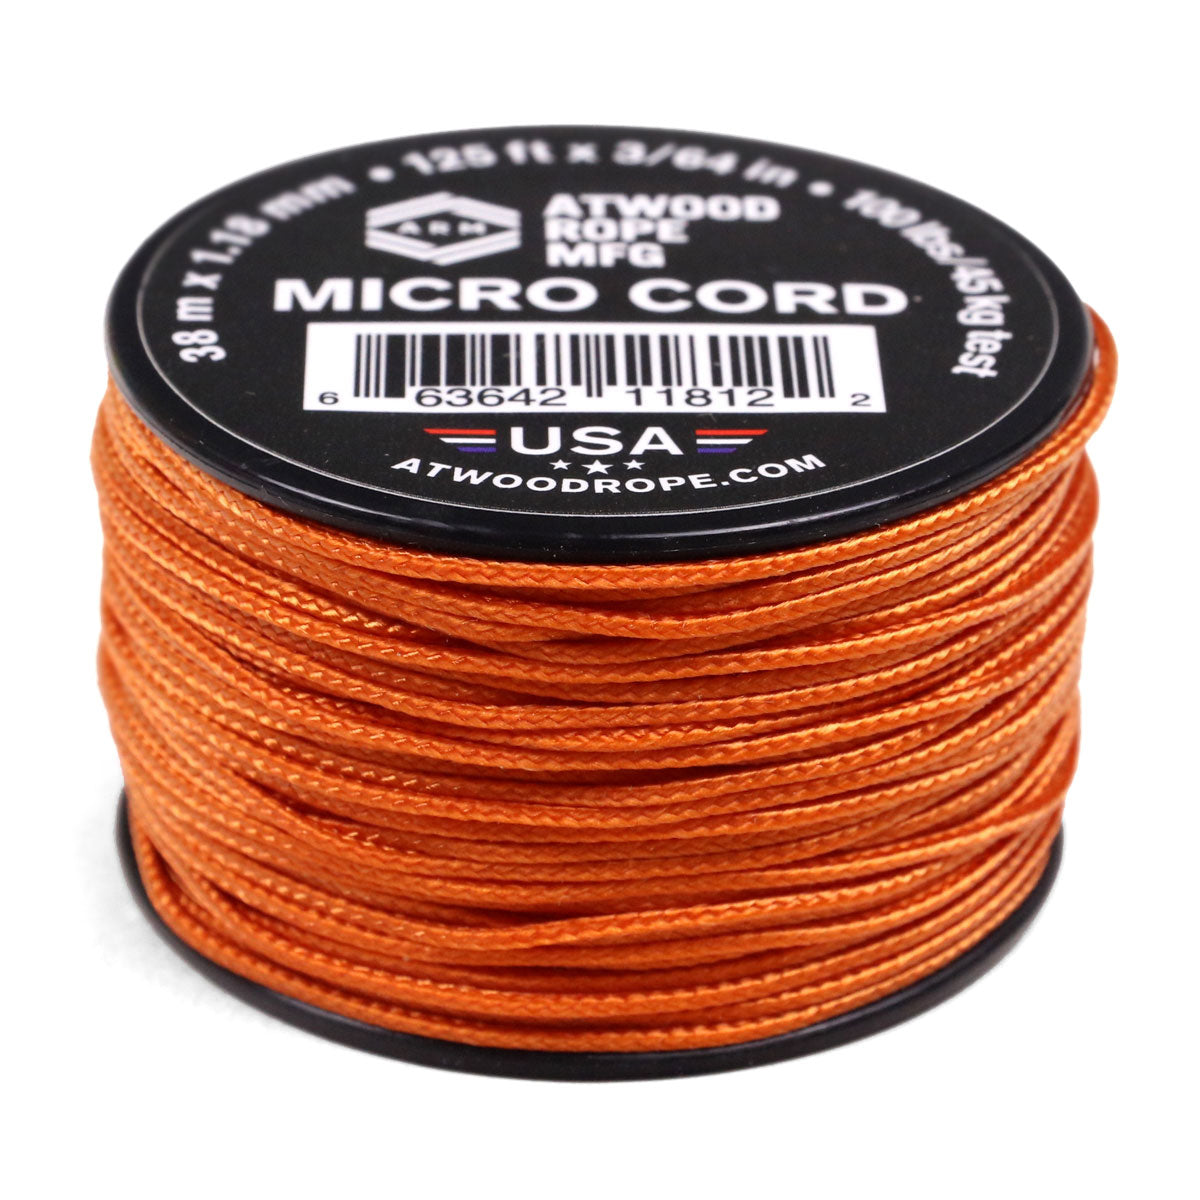 1.18mm Micro Cord - Burnt Orange